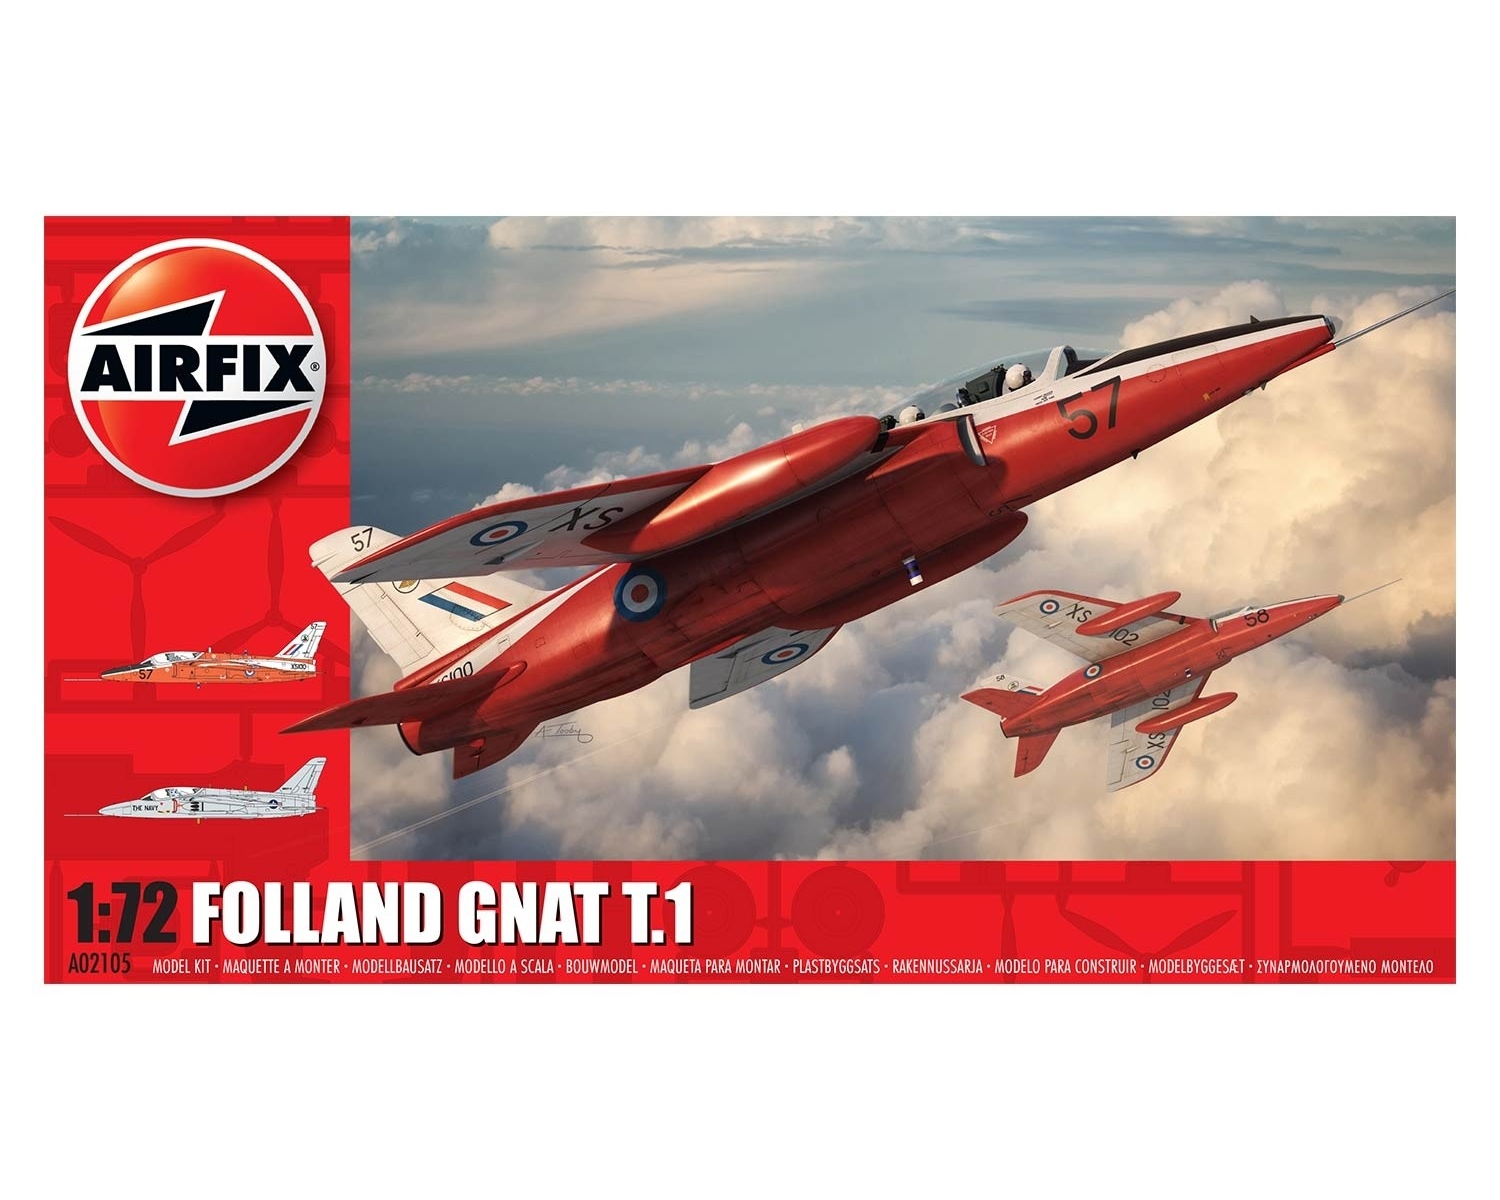 Airfix 02105 - FOLLAND GNAT T.1